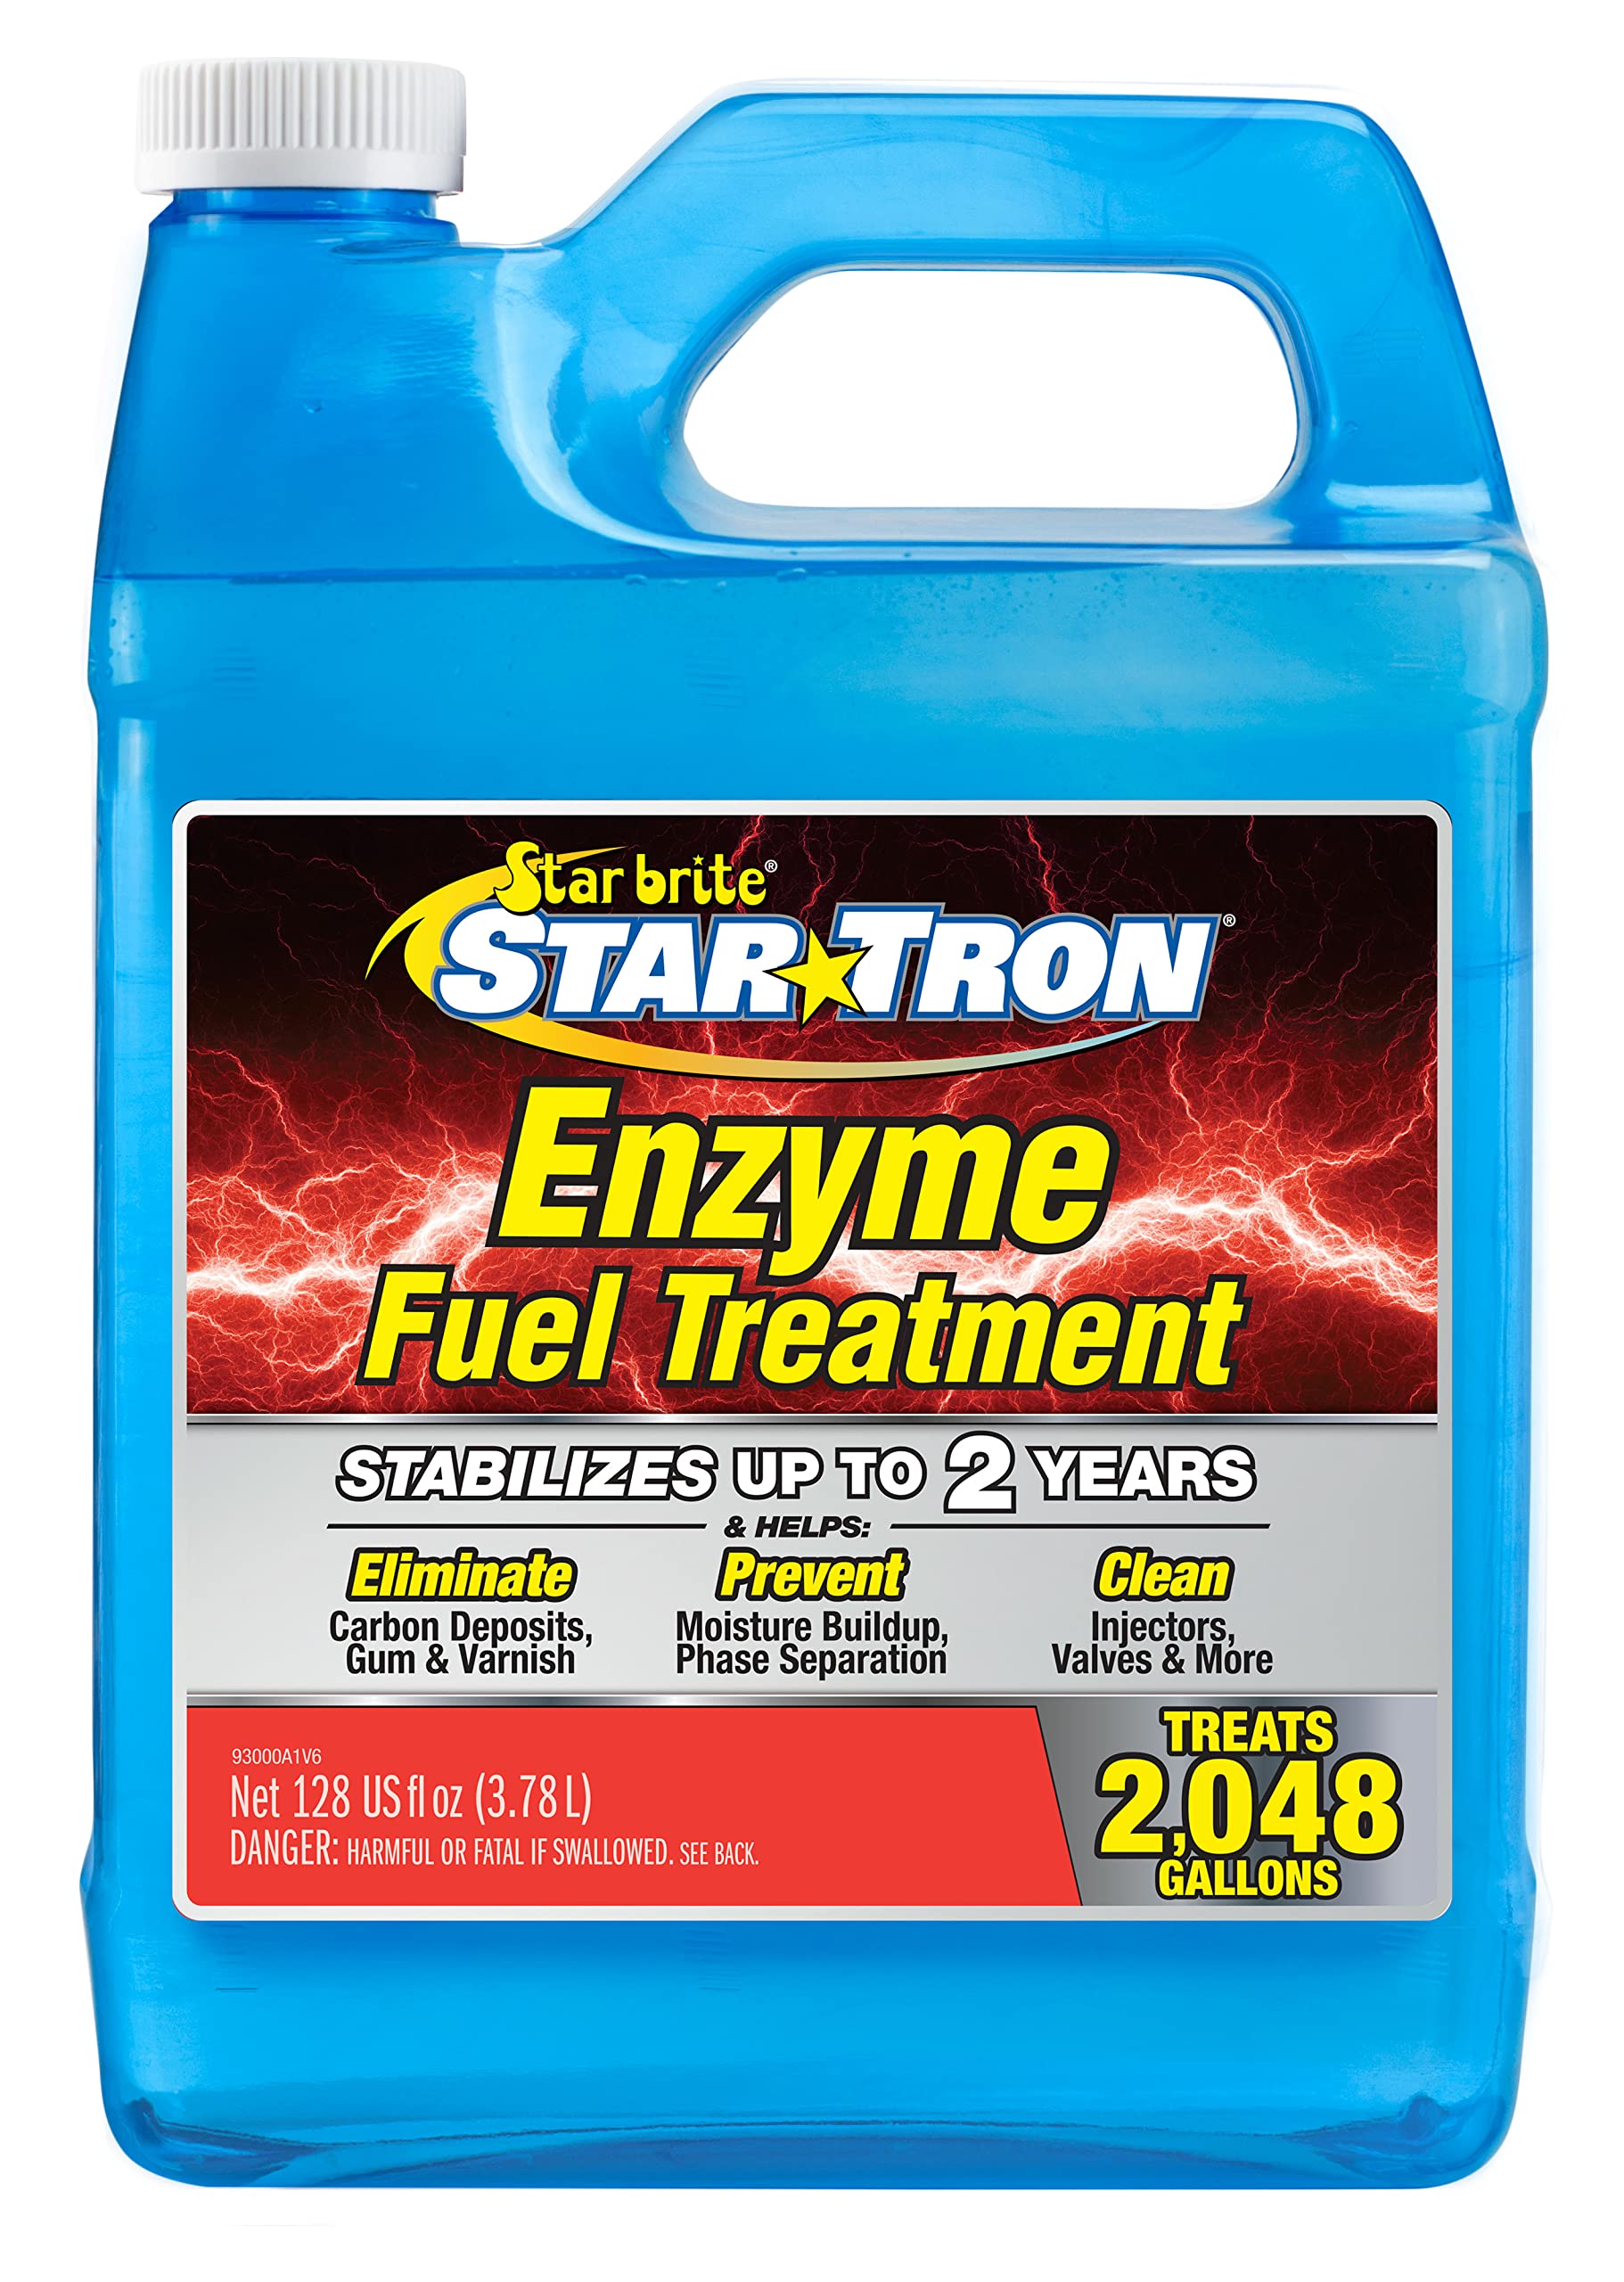 STAR BRITE Star Tron Enzyme Fuel Treatment Concentrate - Rejuvenate & Stabilize Old Gasoline, Cure Ethanol Problems, Improve MPG, Reduce Emissions, Increase Horsepower